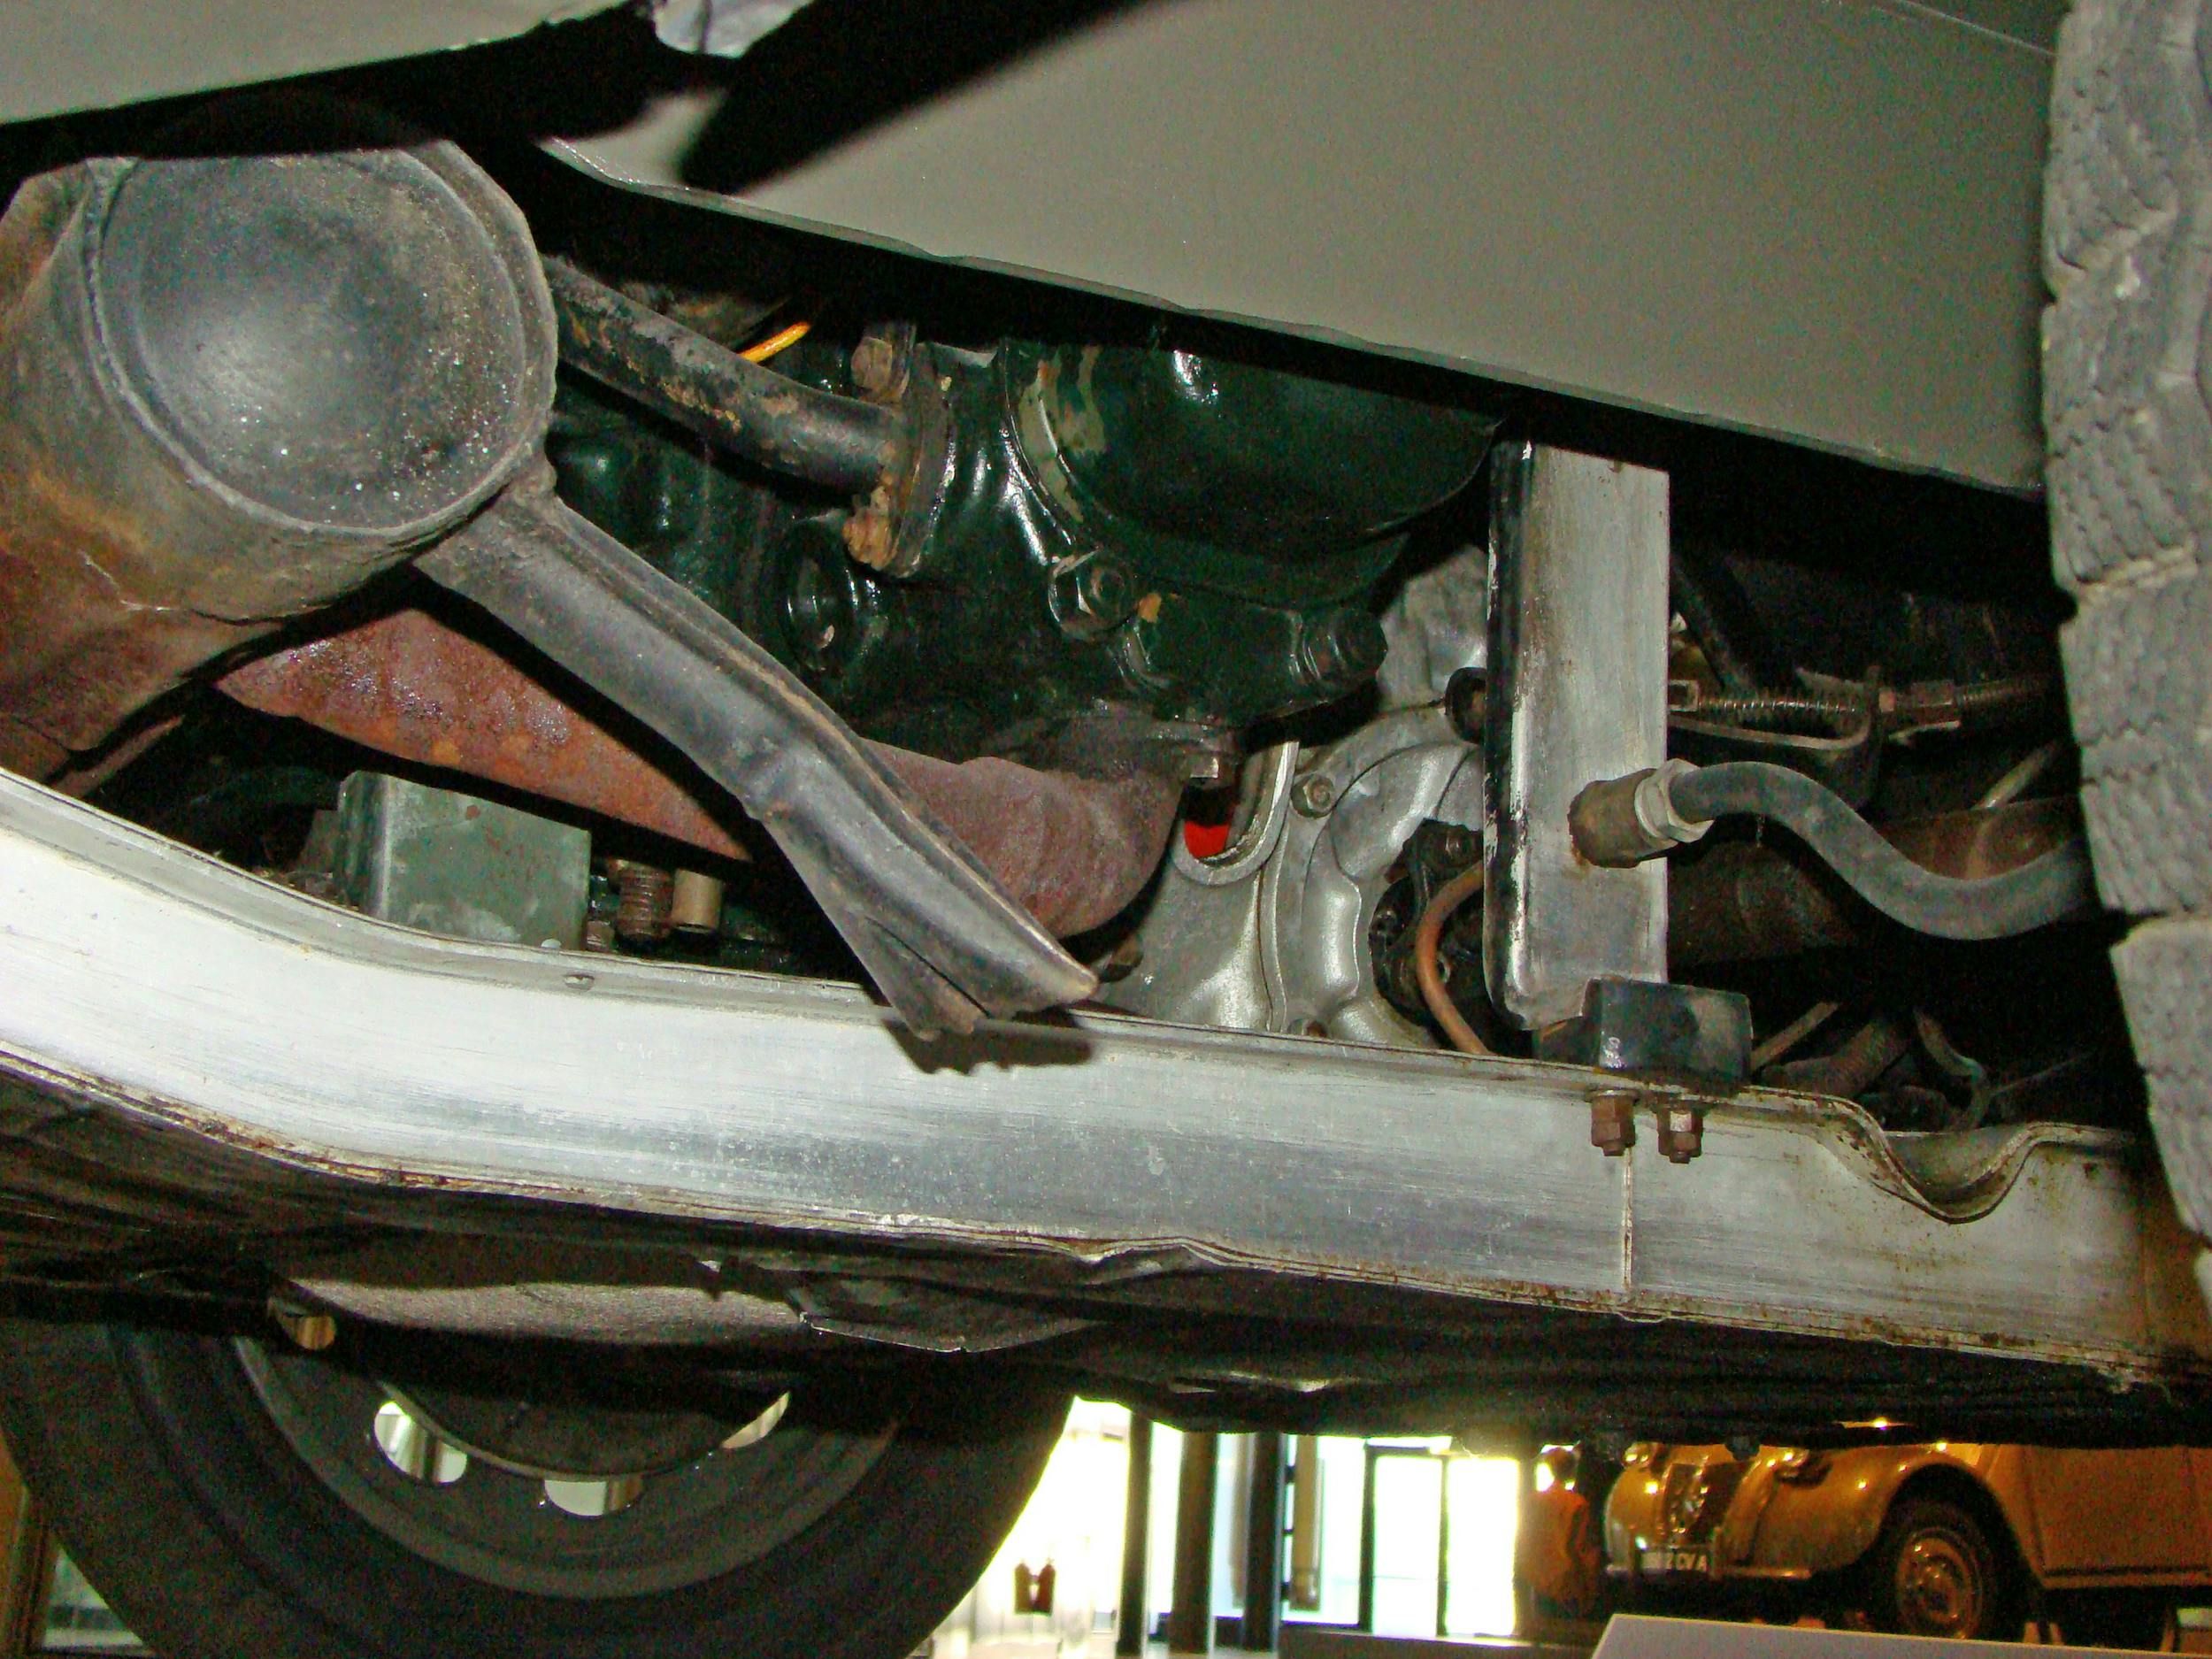 1939 citroen 2cv engine